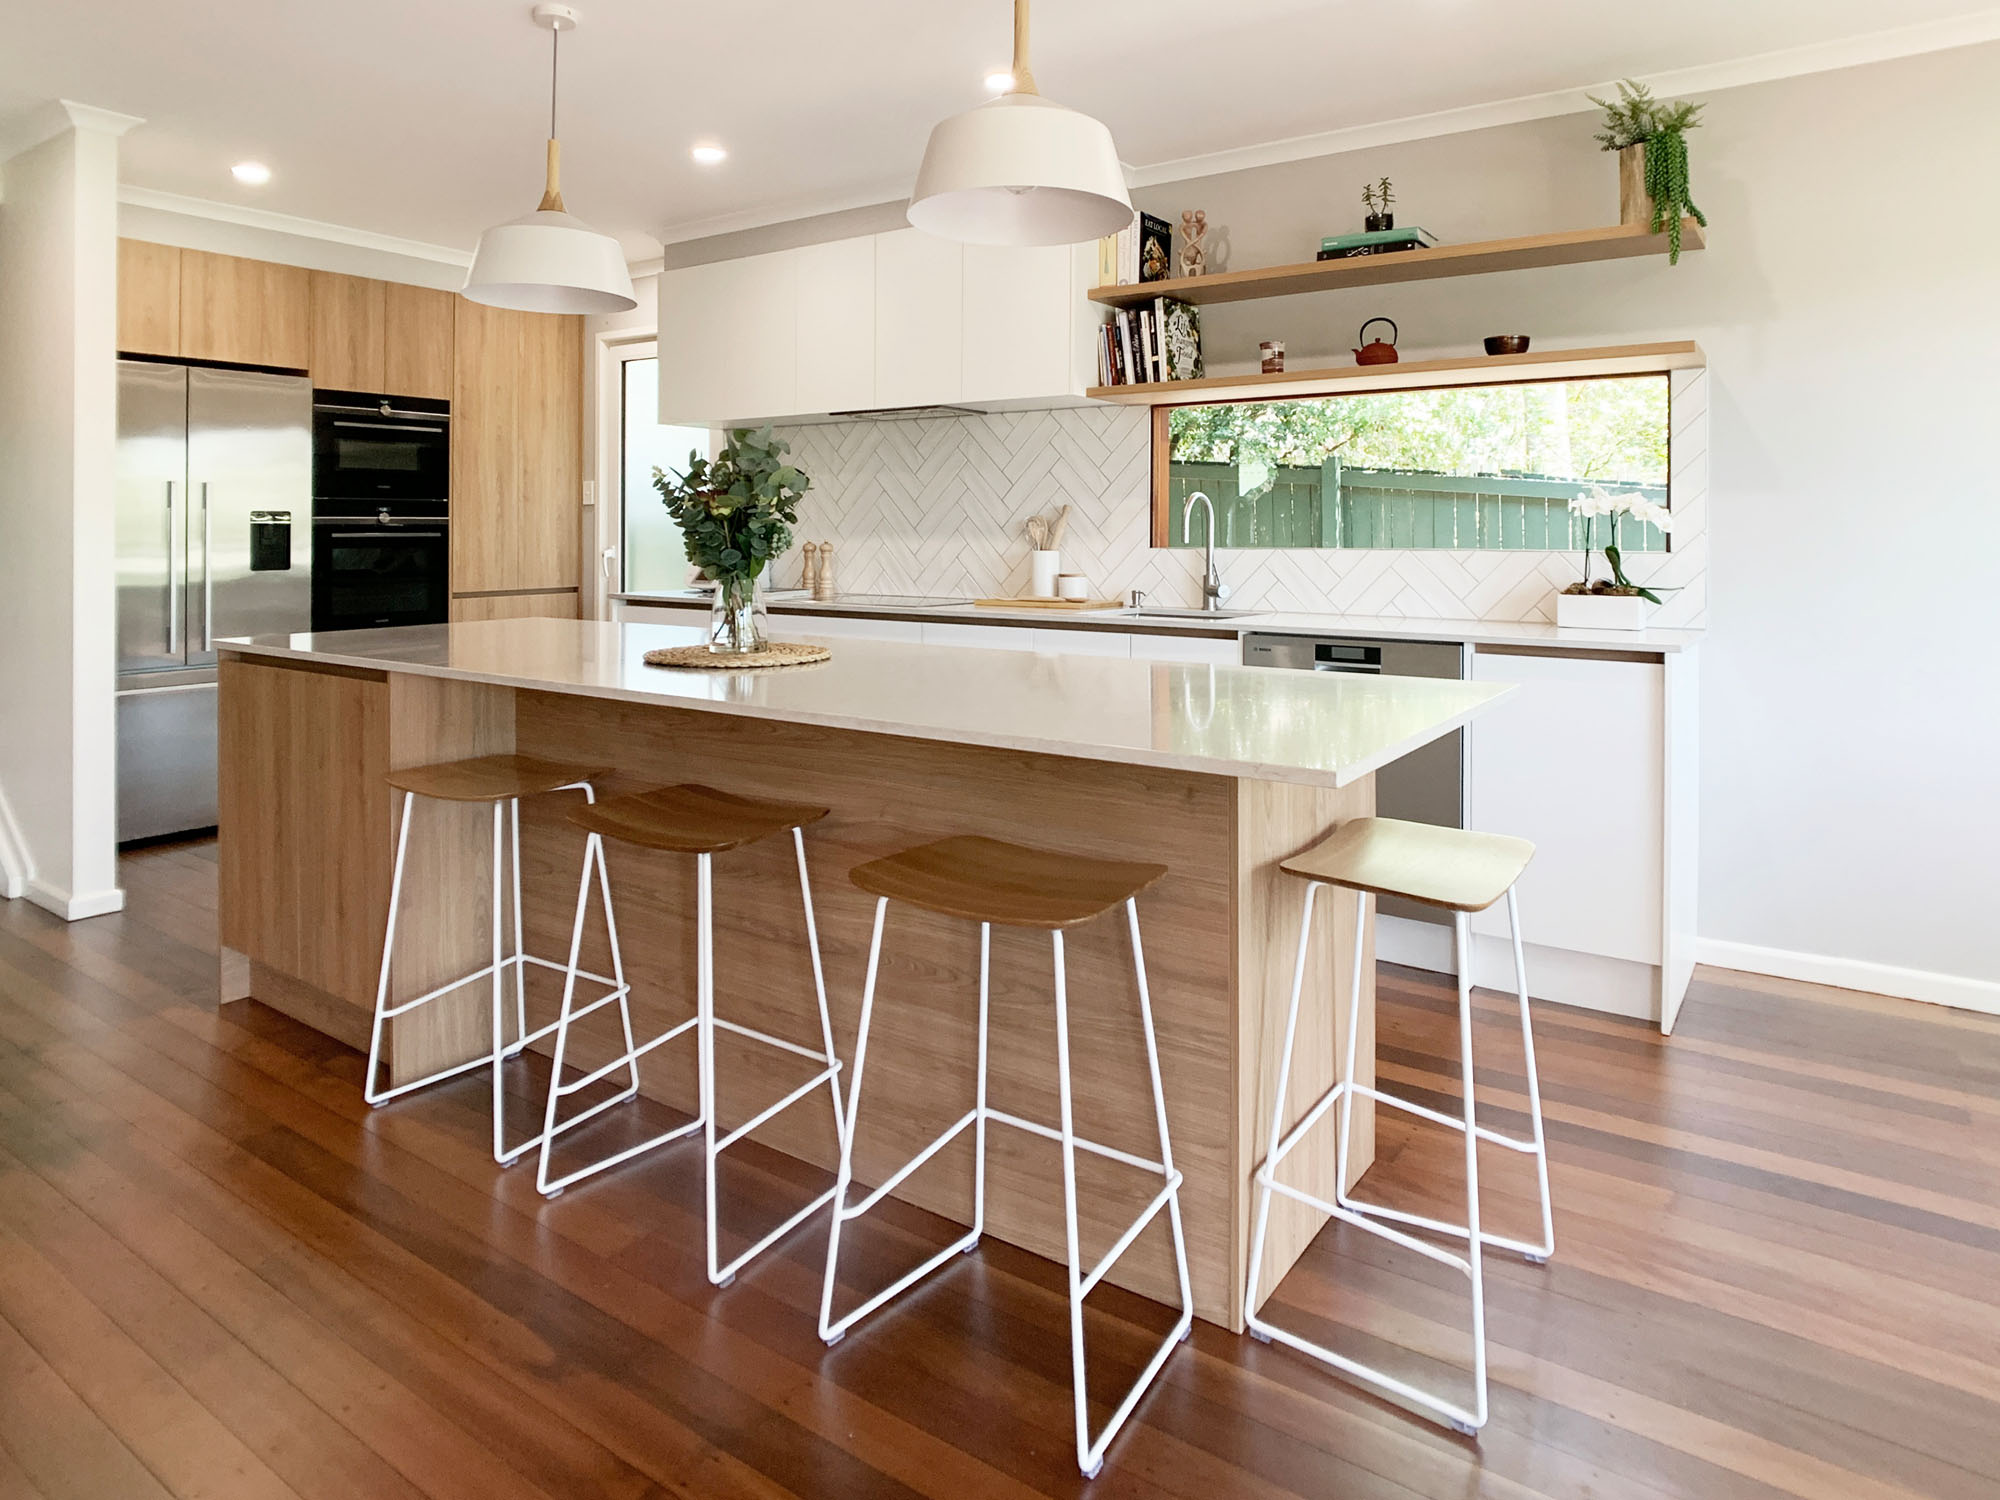 Our Kitchen Work Gallery - Brisbane Kitchens and Bathrooms